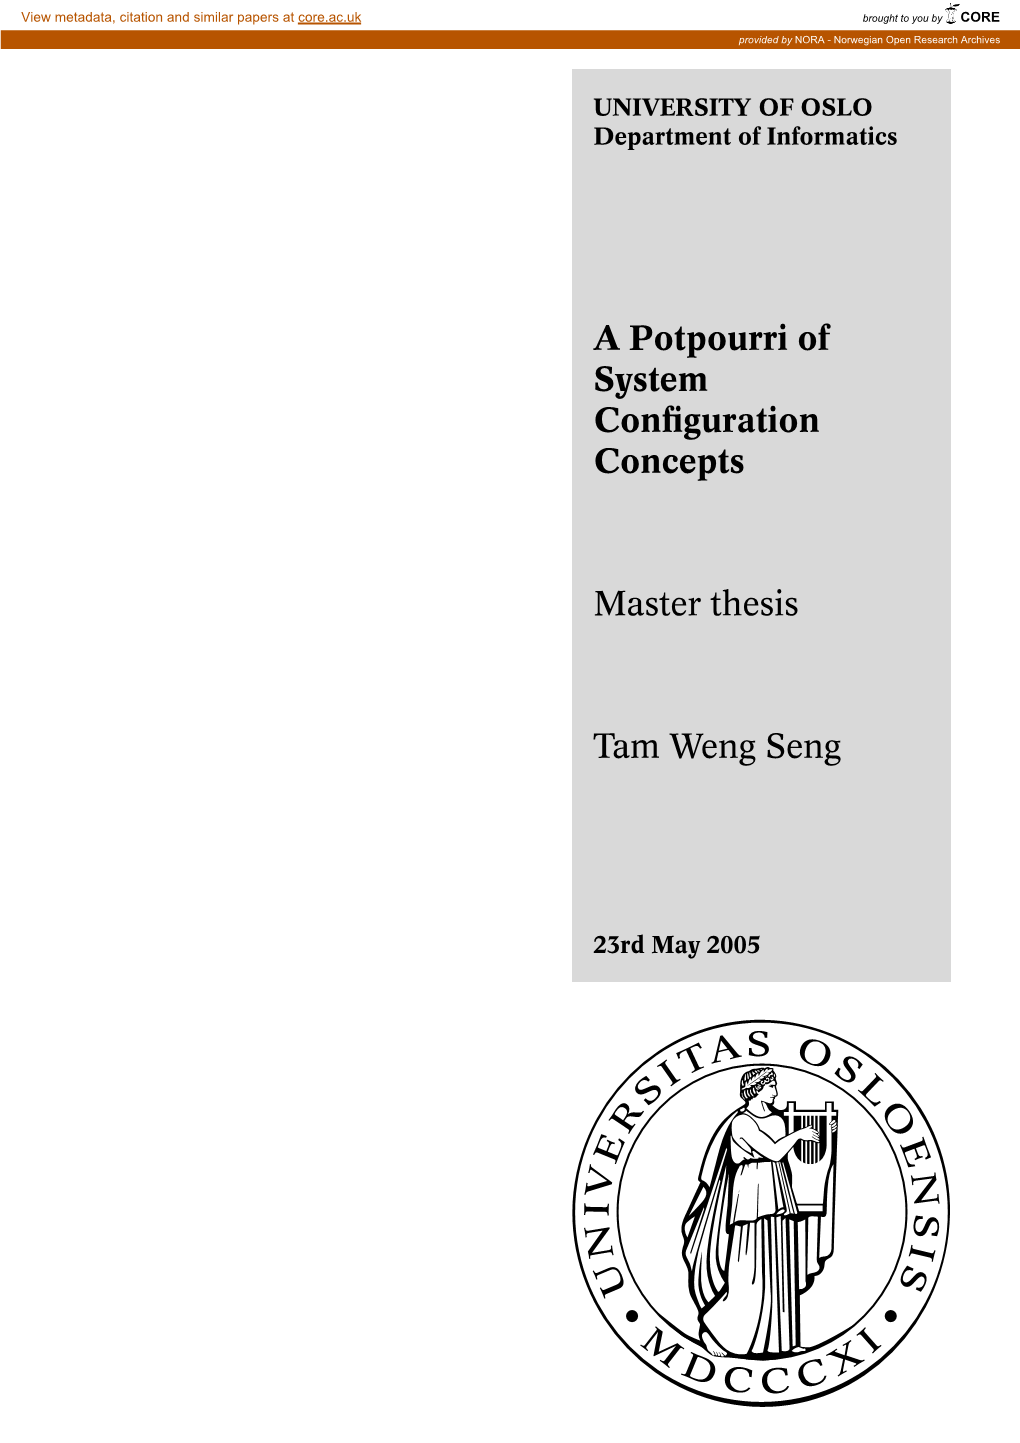 A Potpourri of System Configuration Concepts Master Thesis Tam Weng Seng